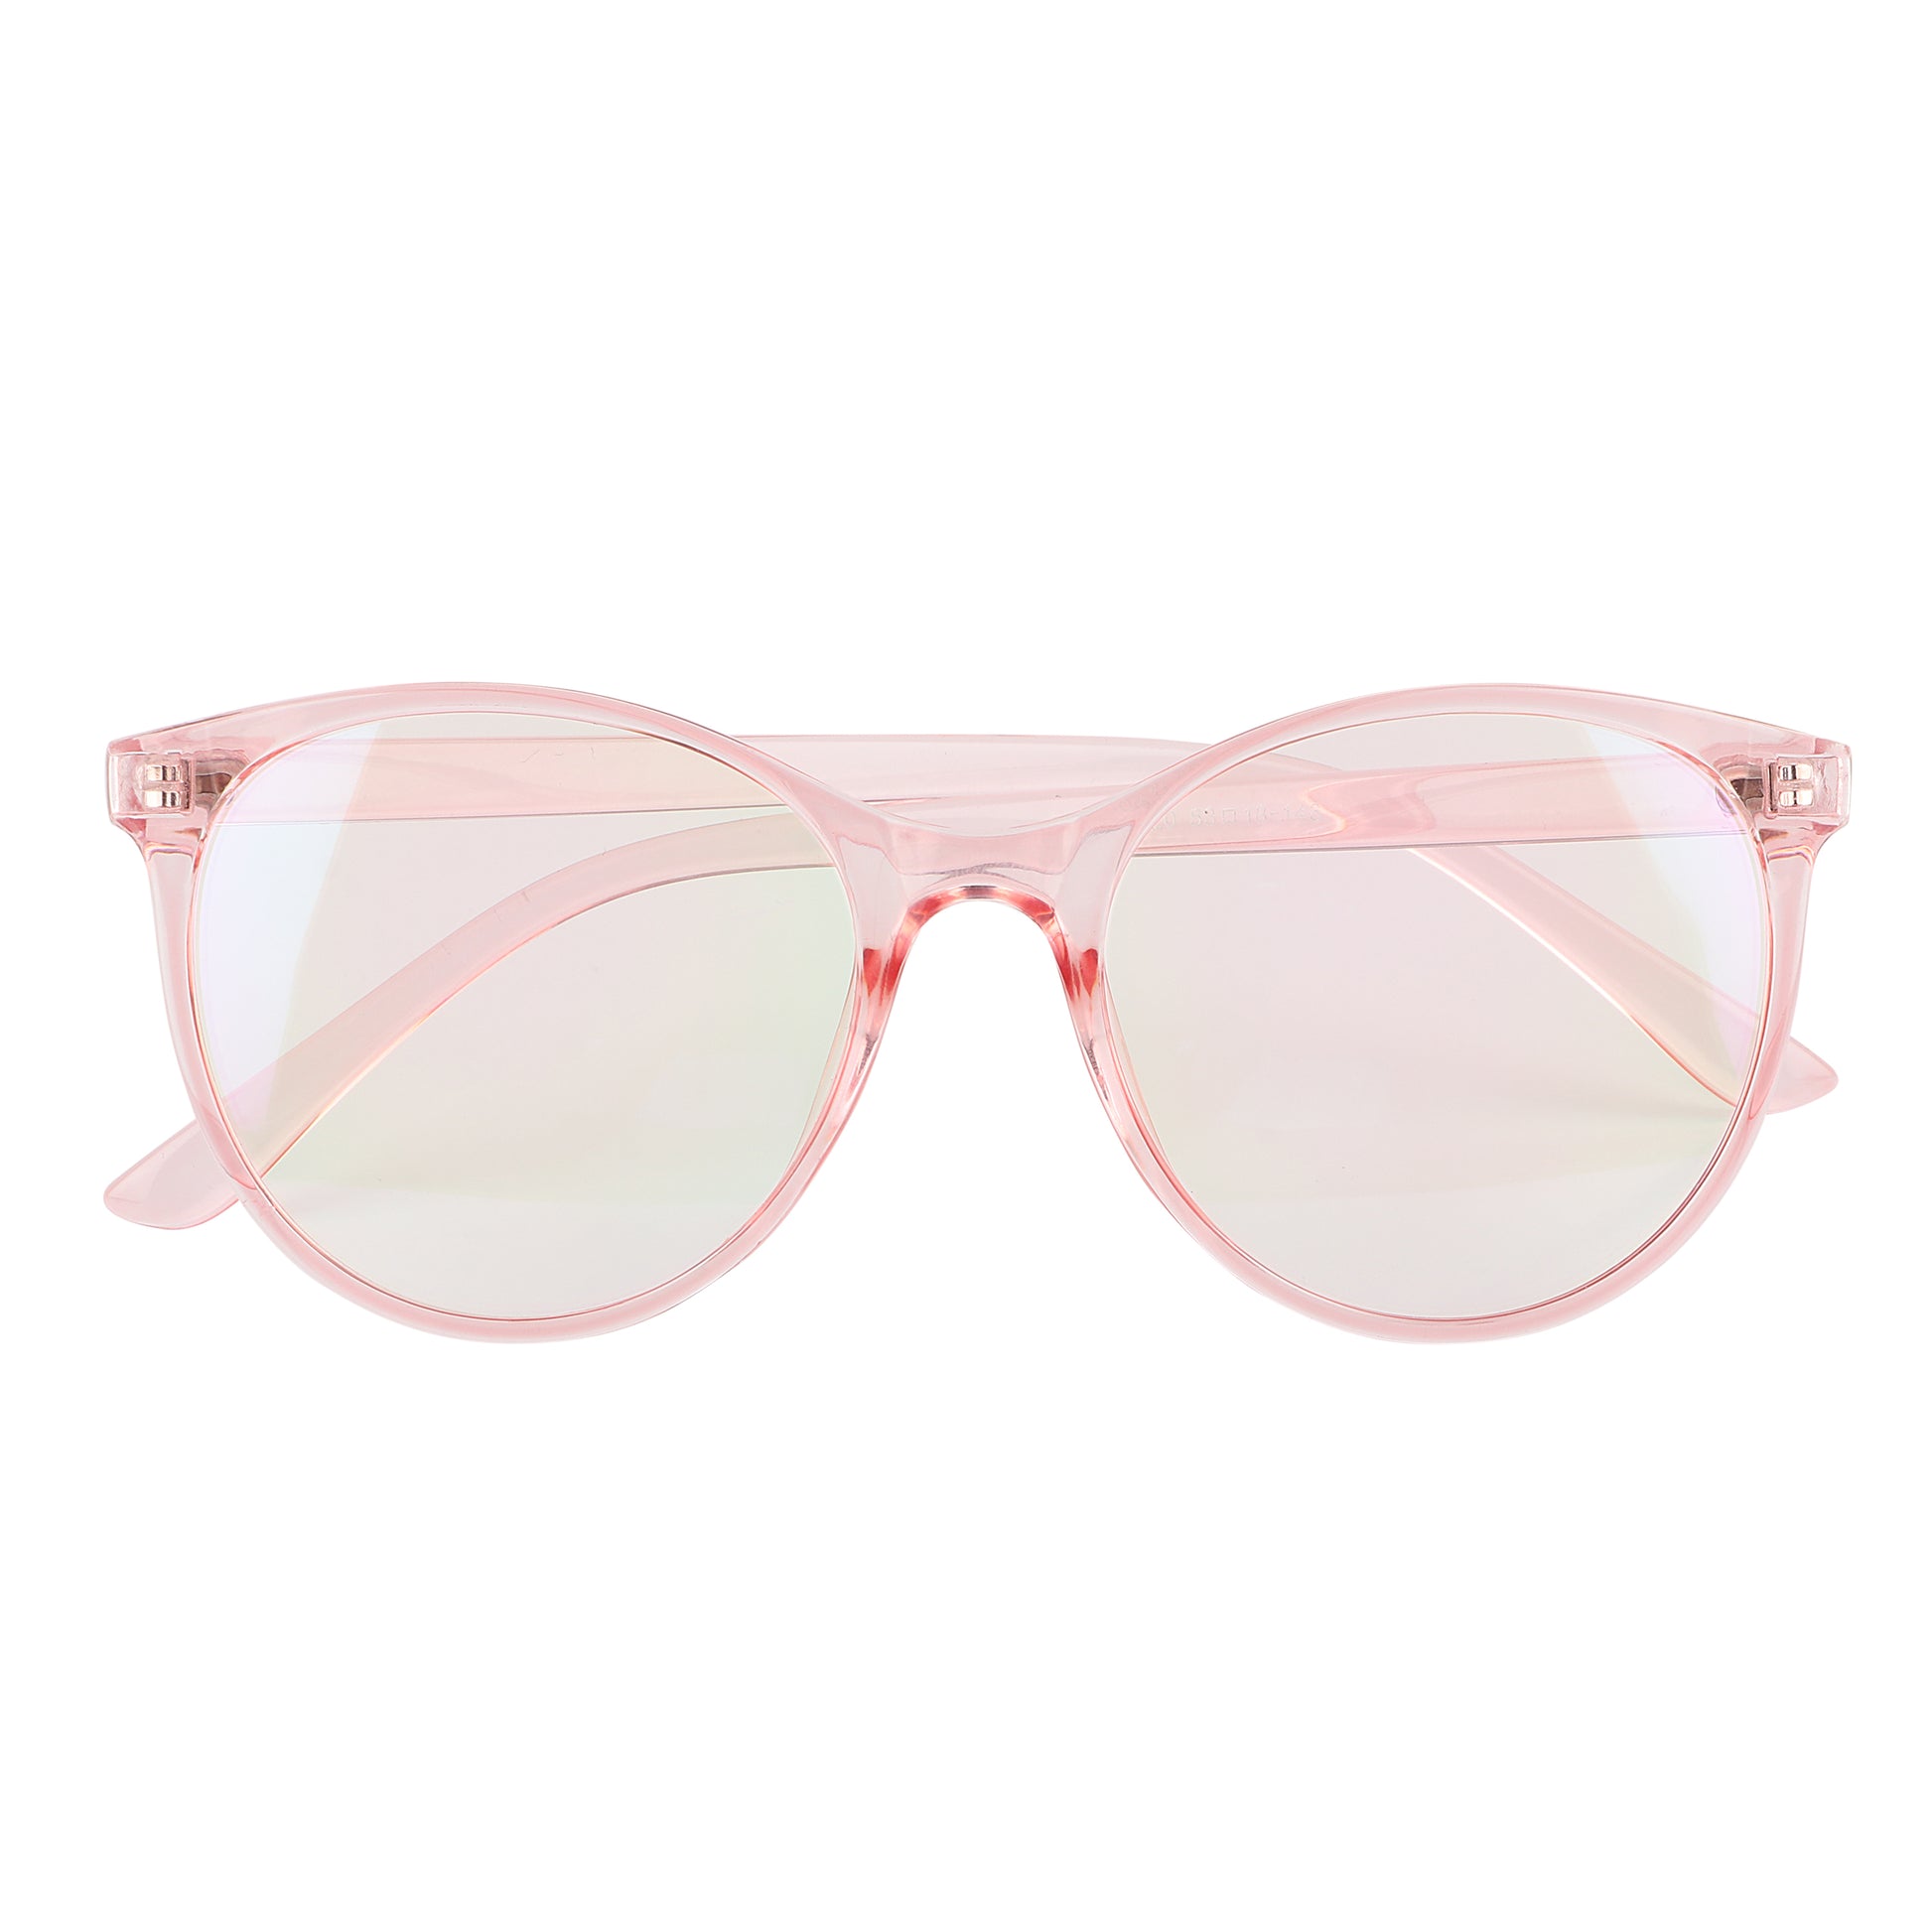 Jodykoes Oversize Fashionable Anti Glare Round Frame (Pink) - Jodykoes ®